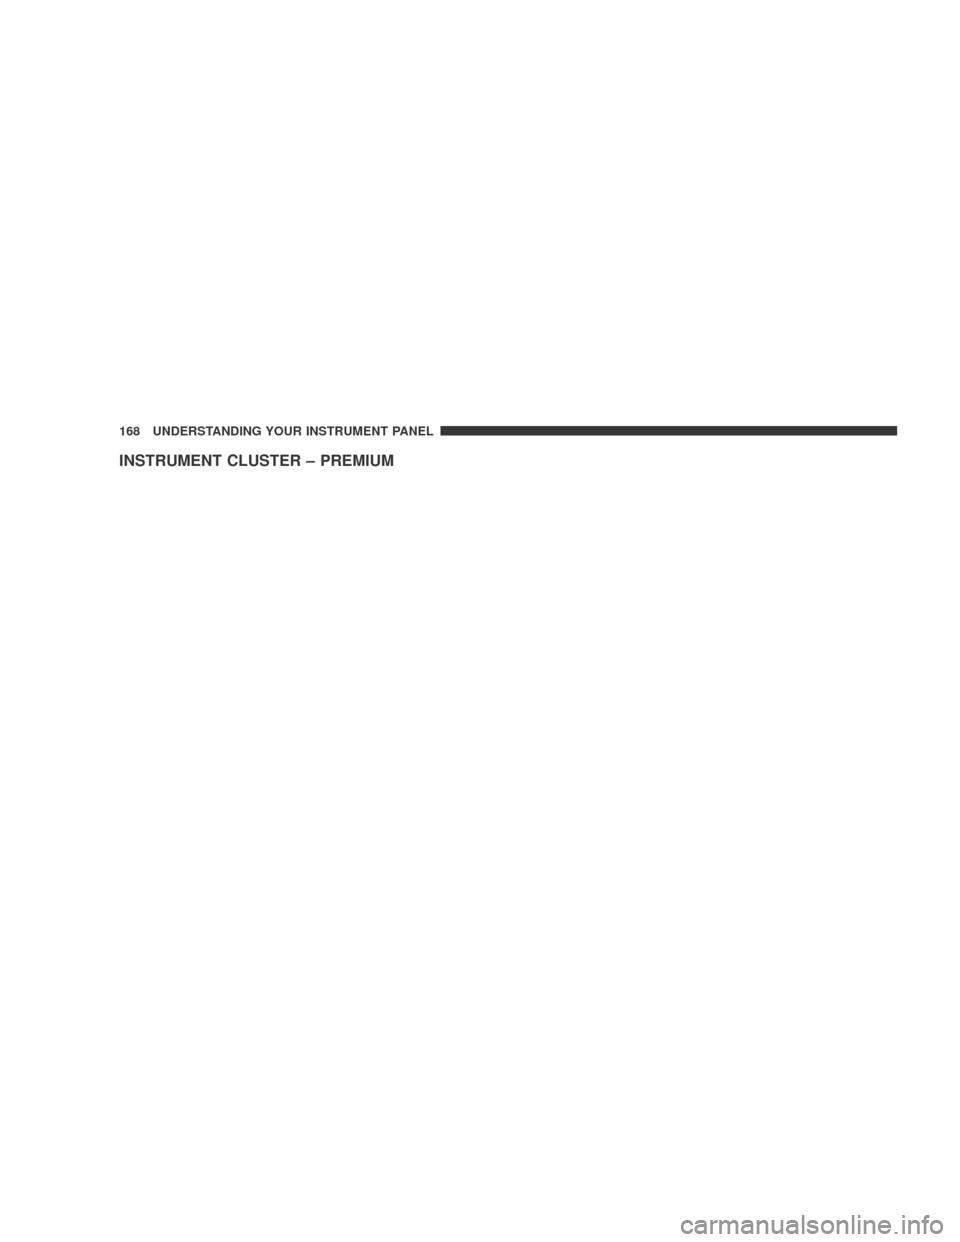 DODGE CALIBER 2009 1.G Owners Manual INSTRUMENT CLUSTER – PREMIUM
168 UNDERSTANDING YOUR INSTRUMENT PANEL 